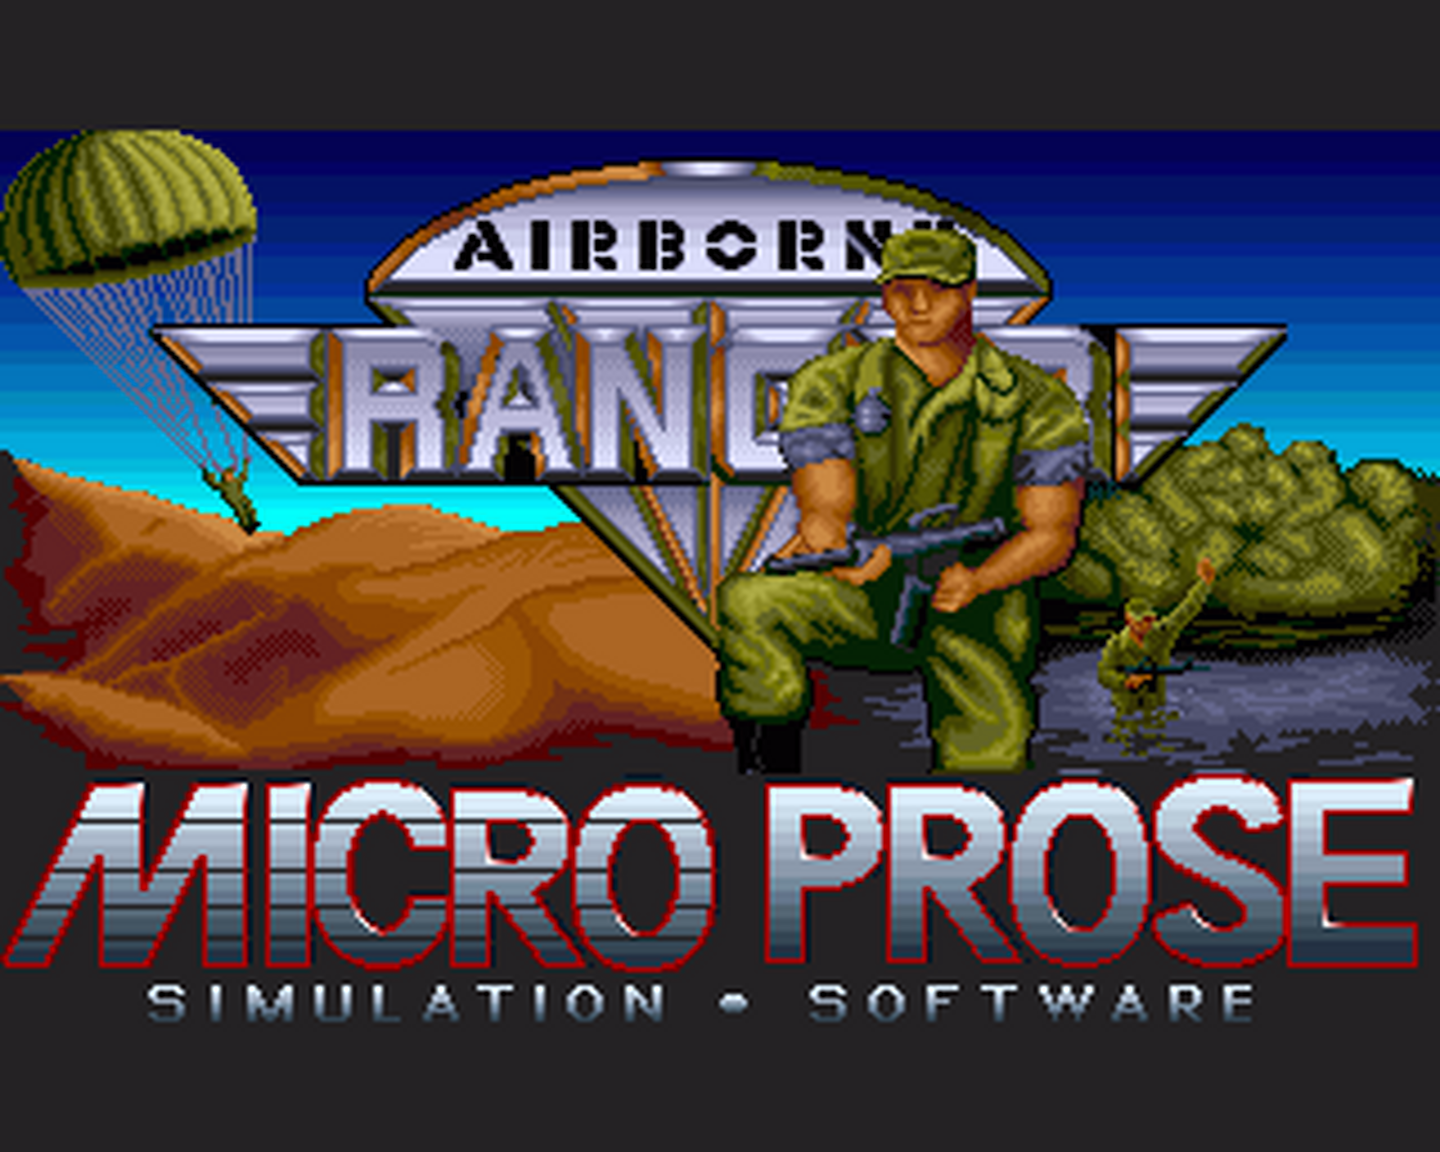 Amiga GameBase Airborne_Ranger MicroProse 1989